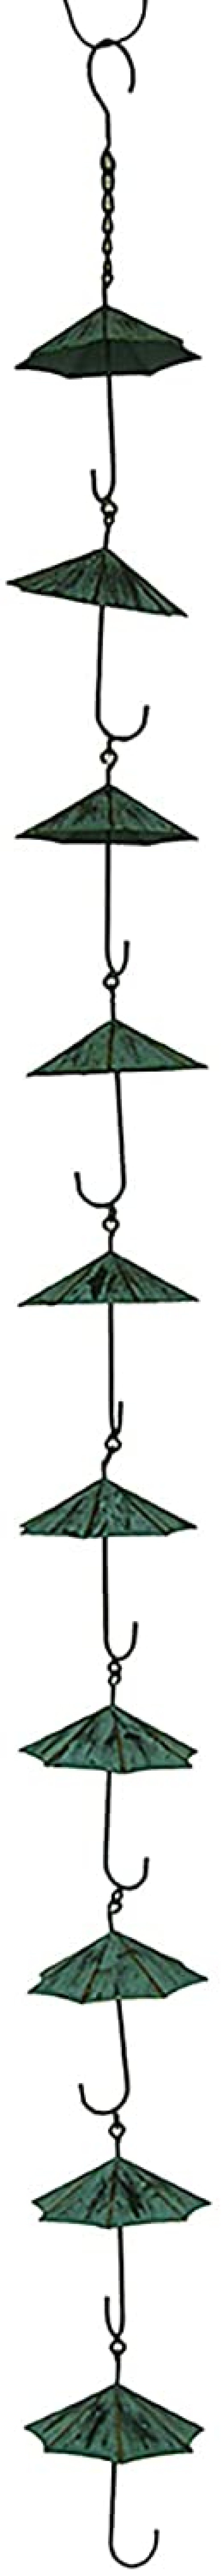 Zeckos Verdigris Finish Metal Lily Flower Rain Chain w/Attached Hanger 48 Inch 